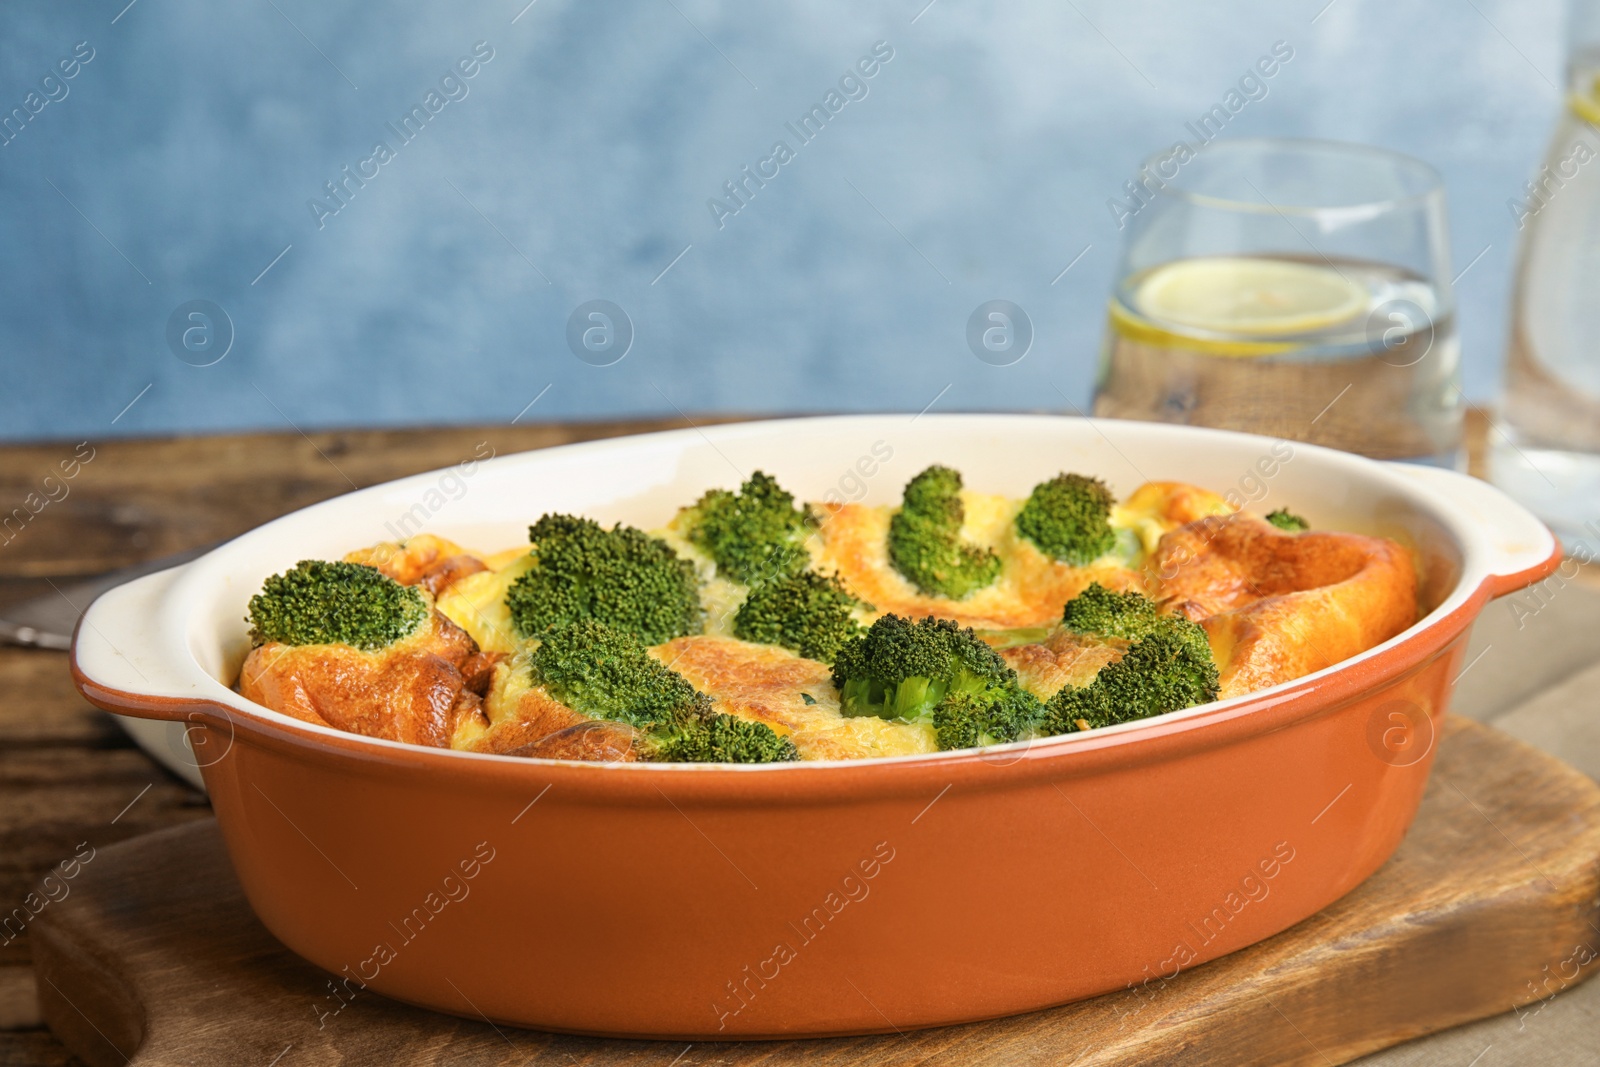 Photo of Tasty broccoli casserole in baking dish on wooden board